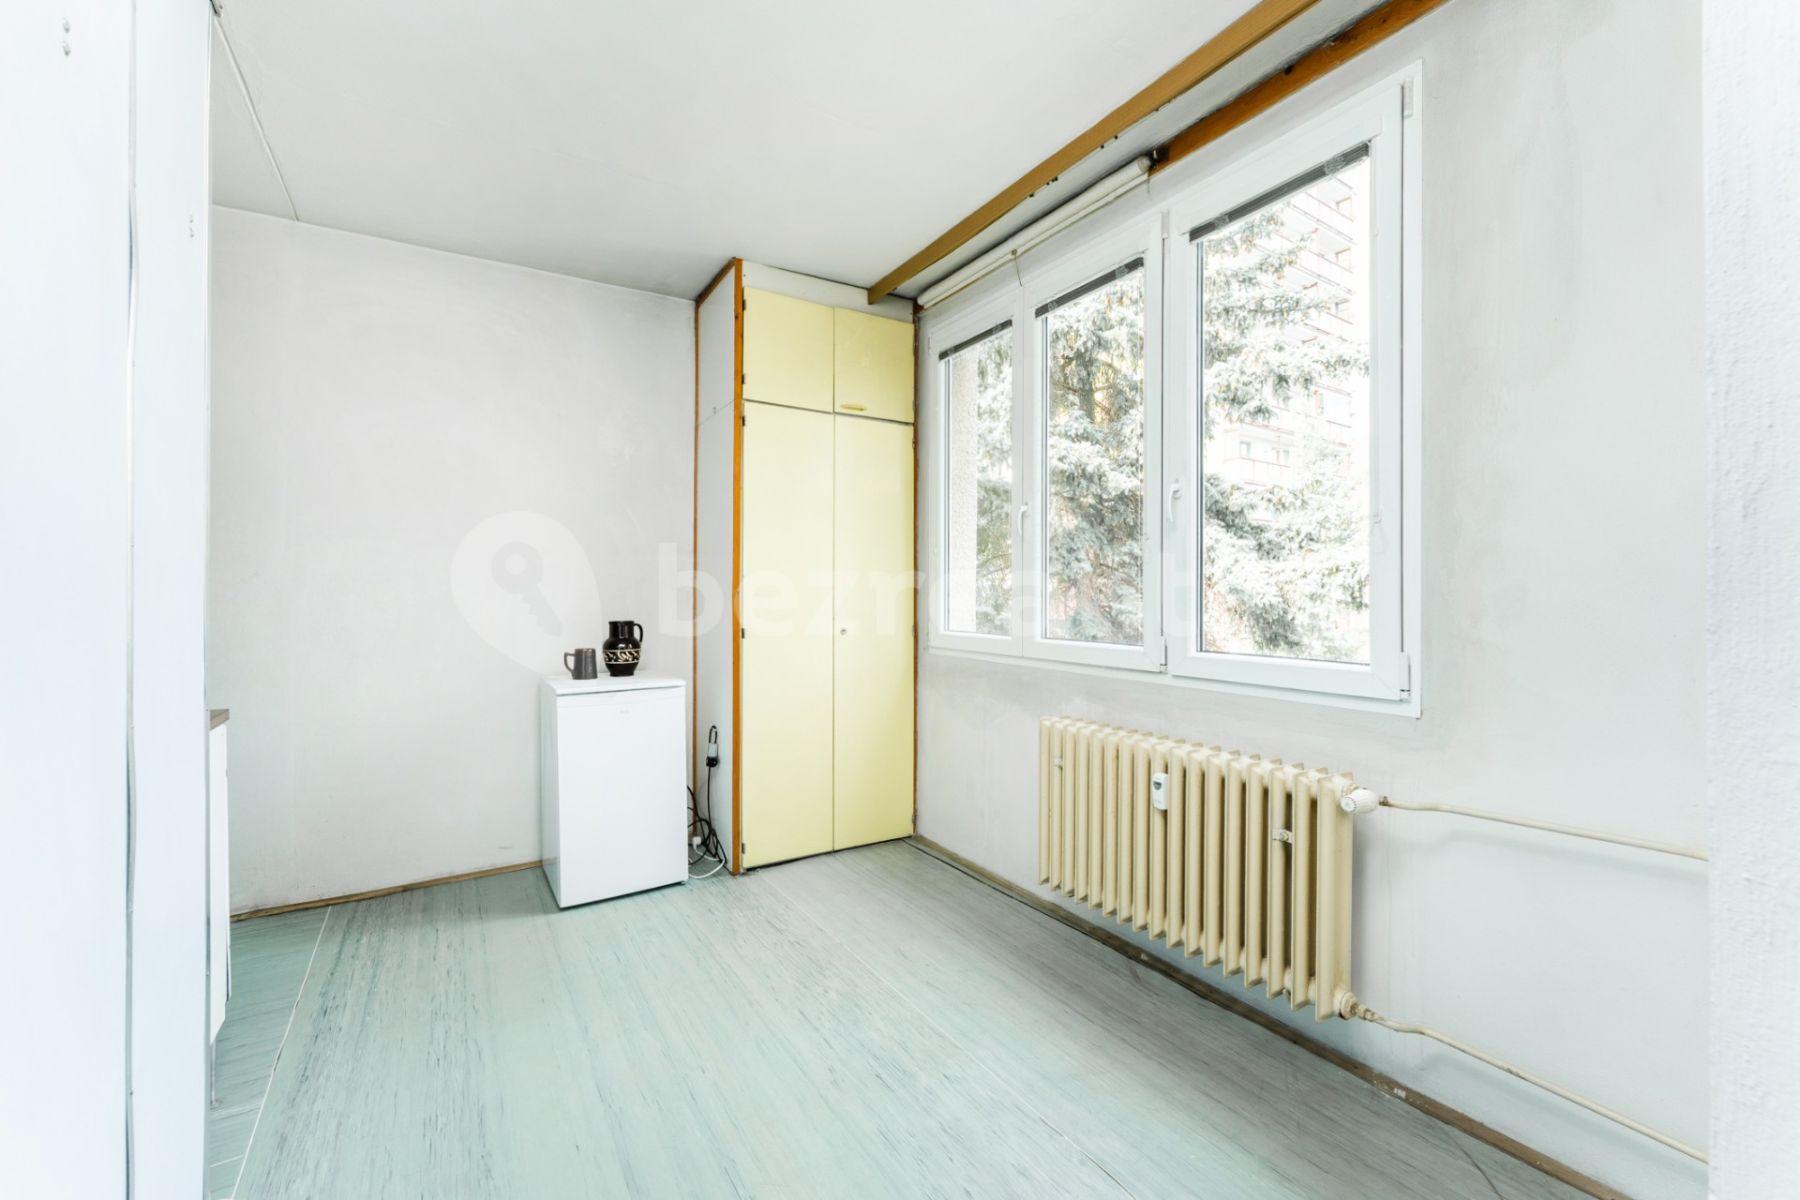 3 bedroom flat for sale, 78 m², U Dvojdomů, Prague, Prague